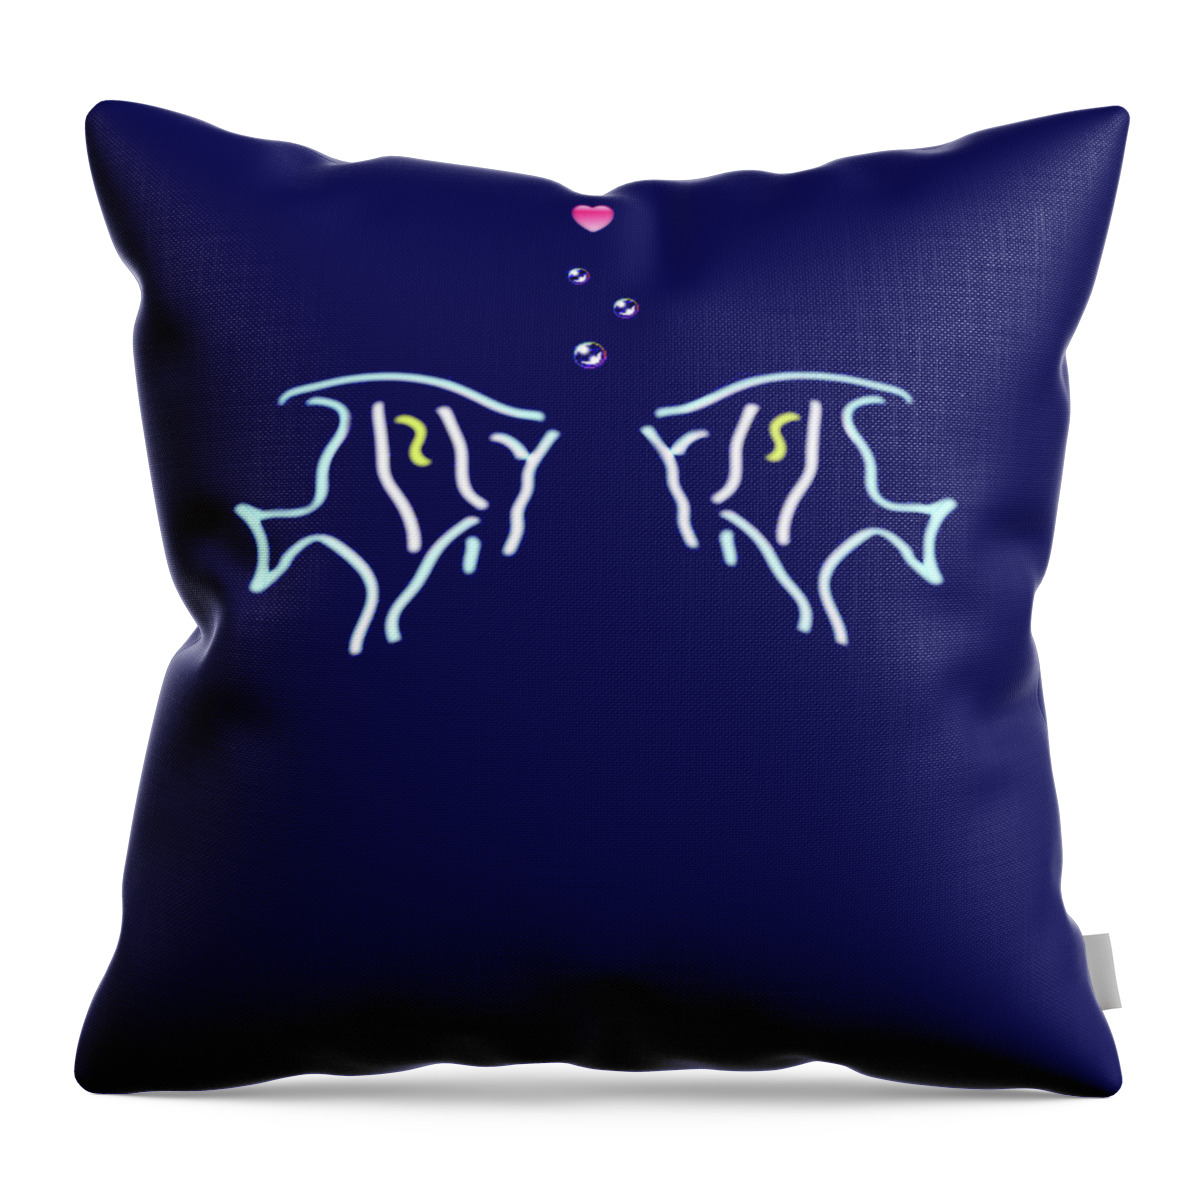 Fish Throw Pillow featuring the digital art Neon Fish Love by David Dehner